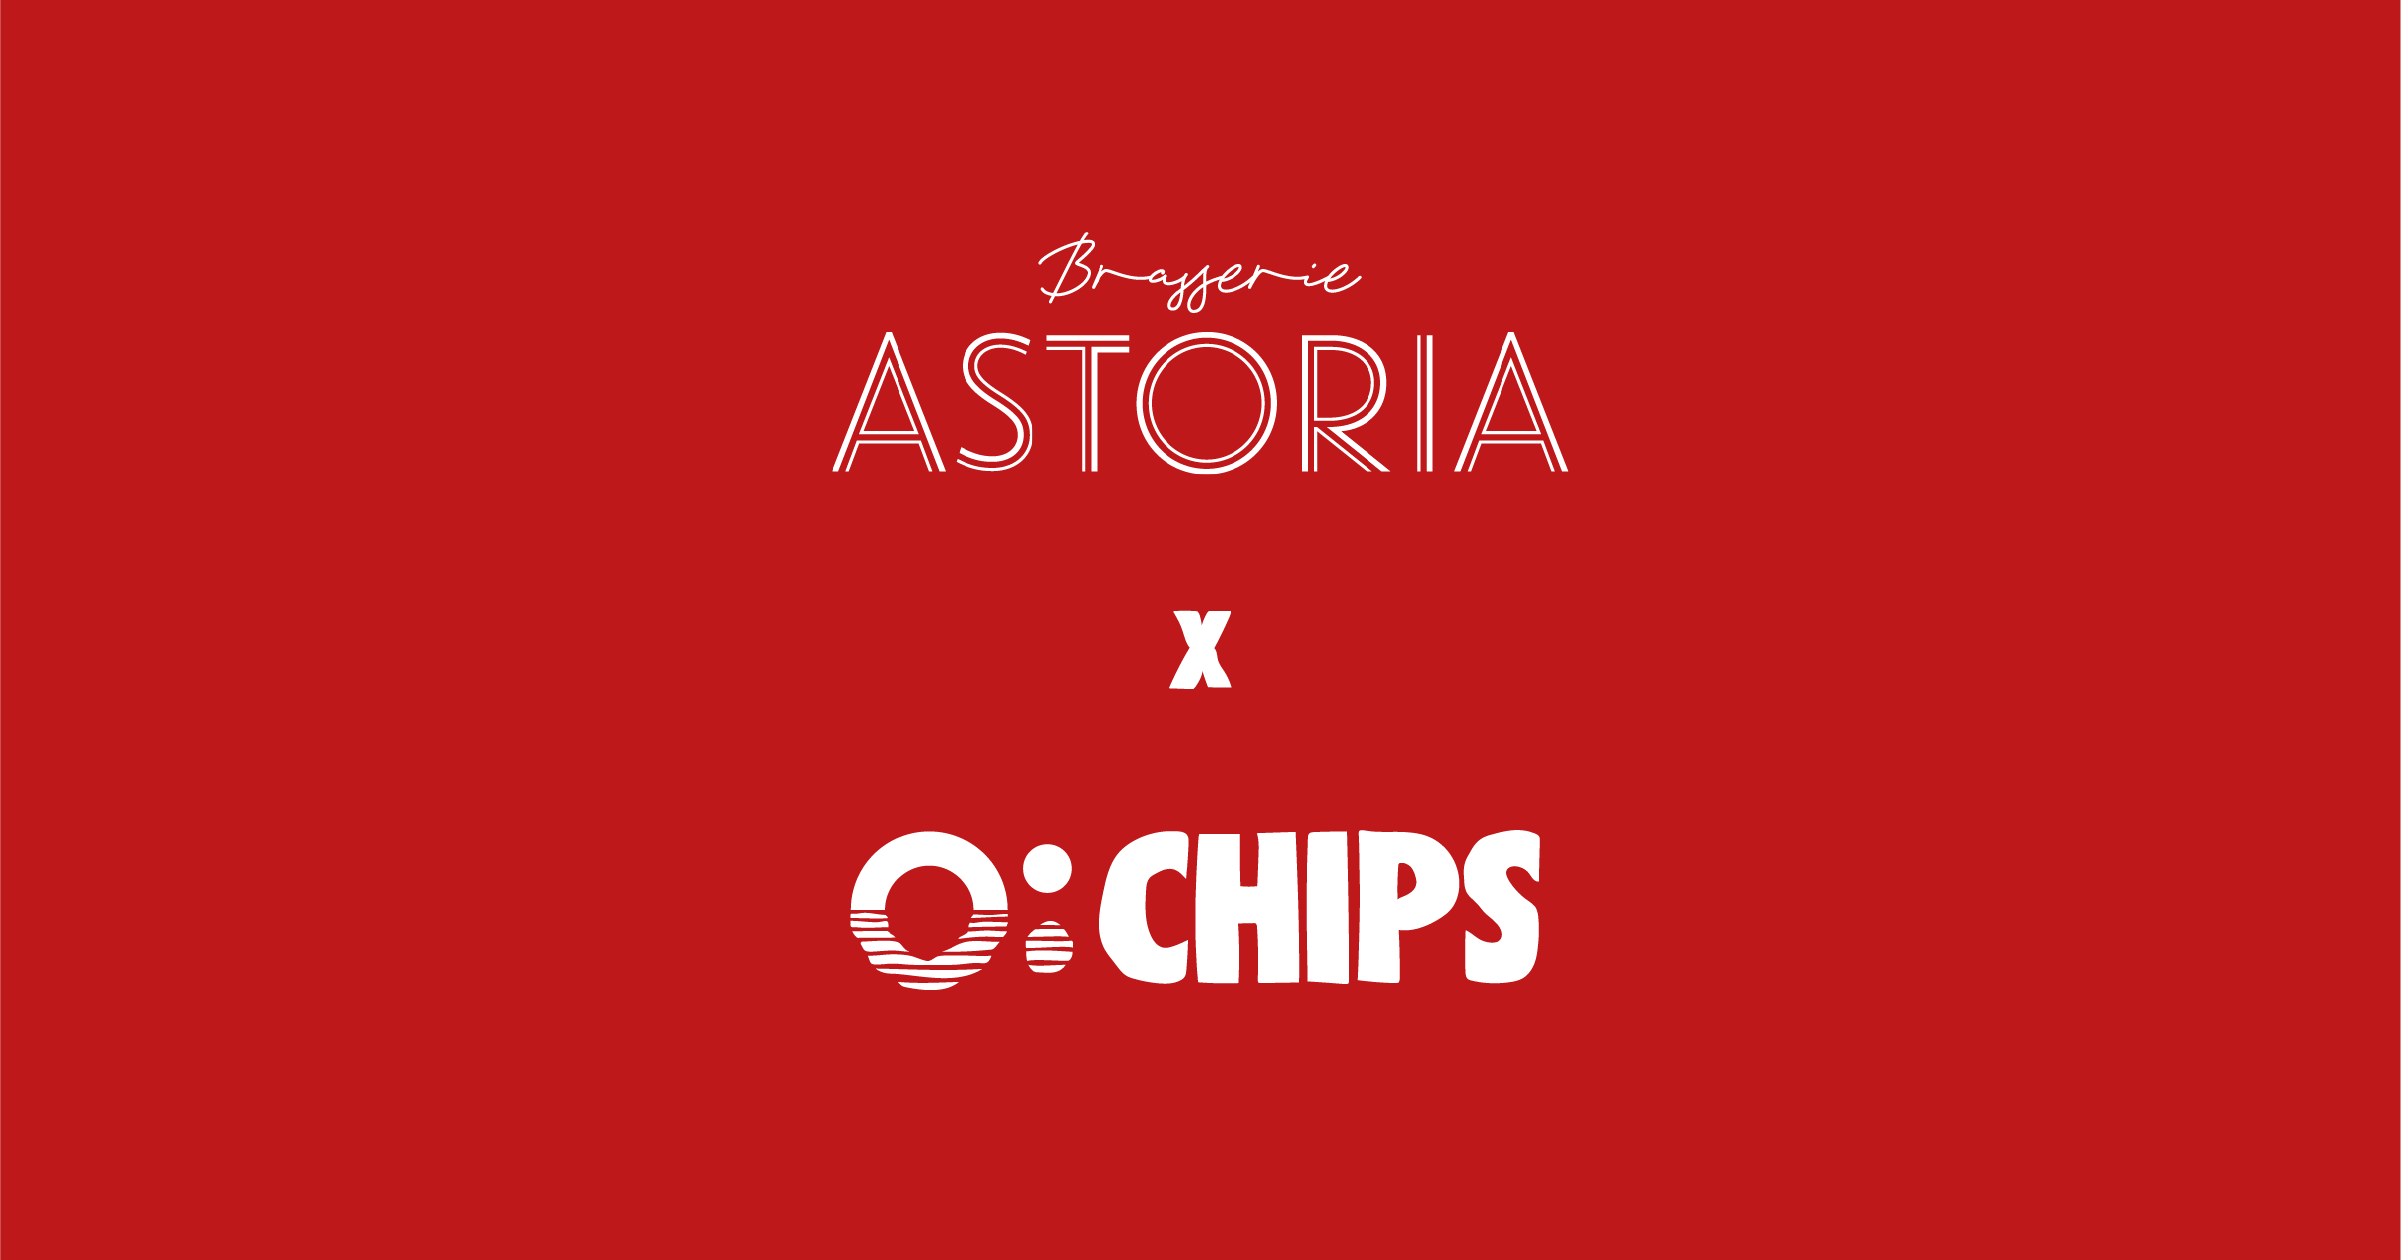 Astoria Ö-chips